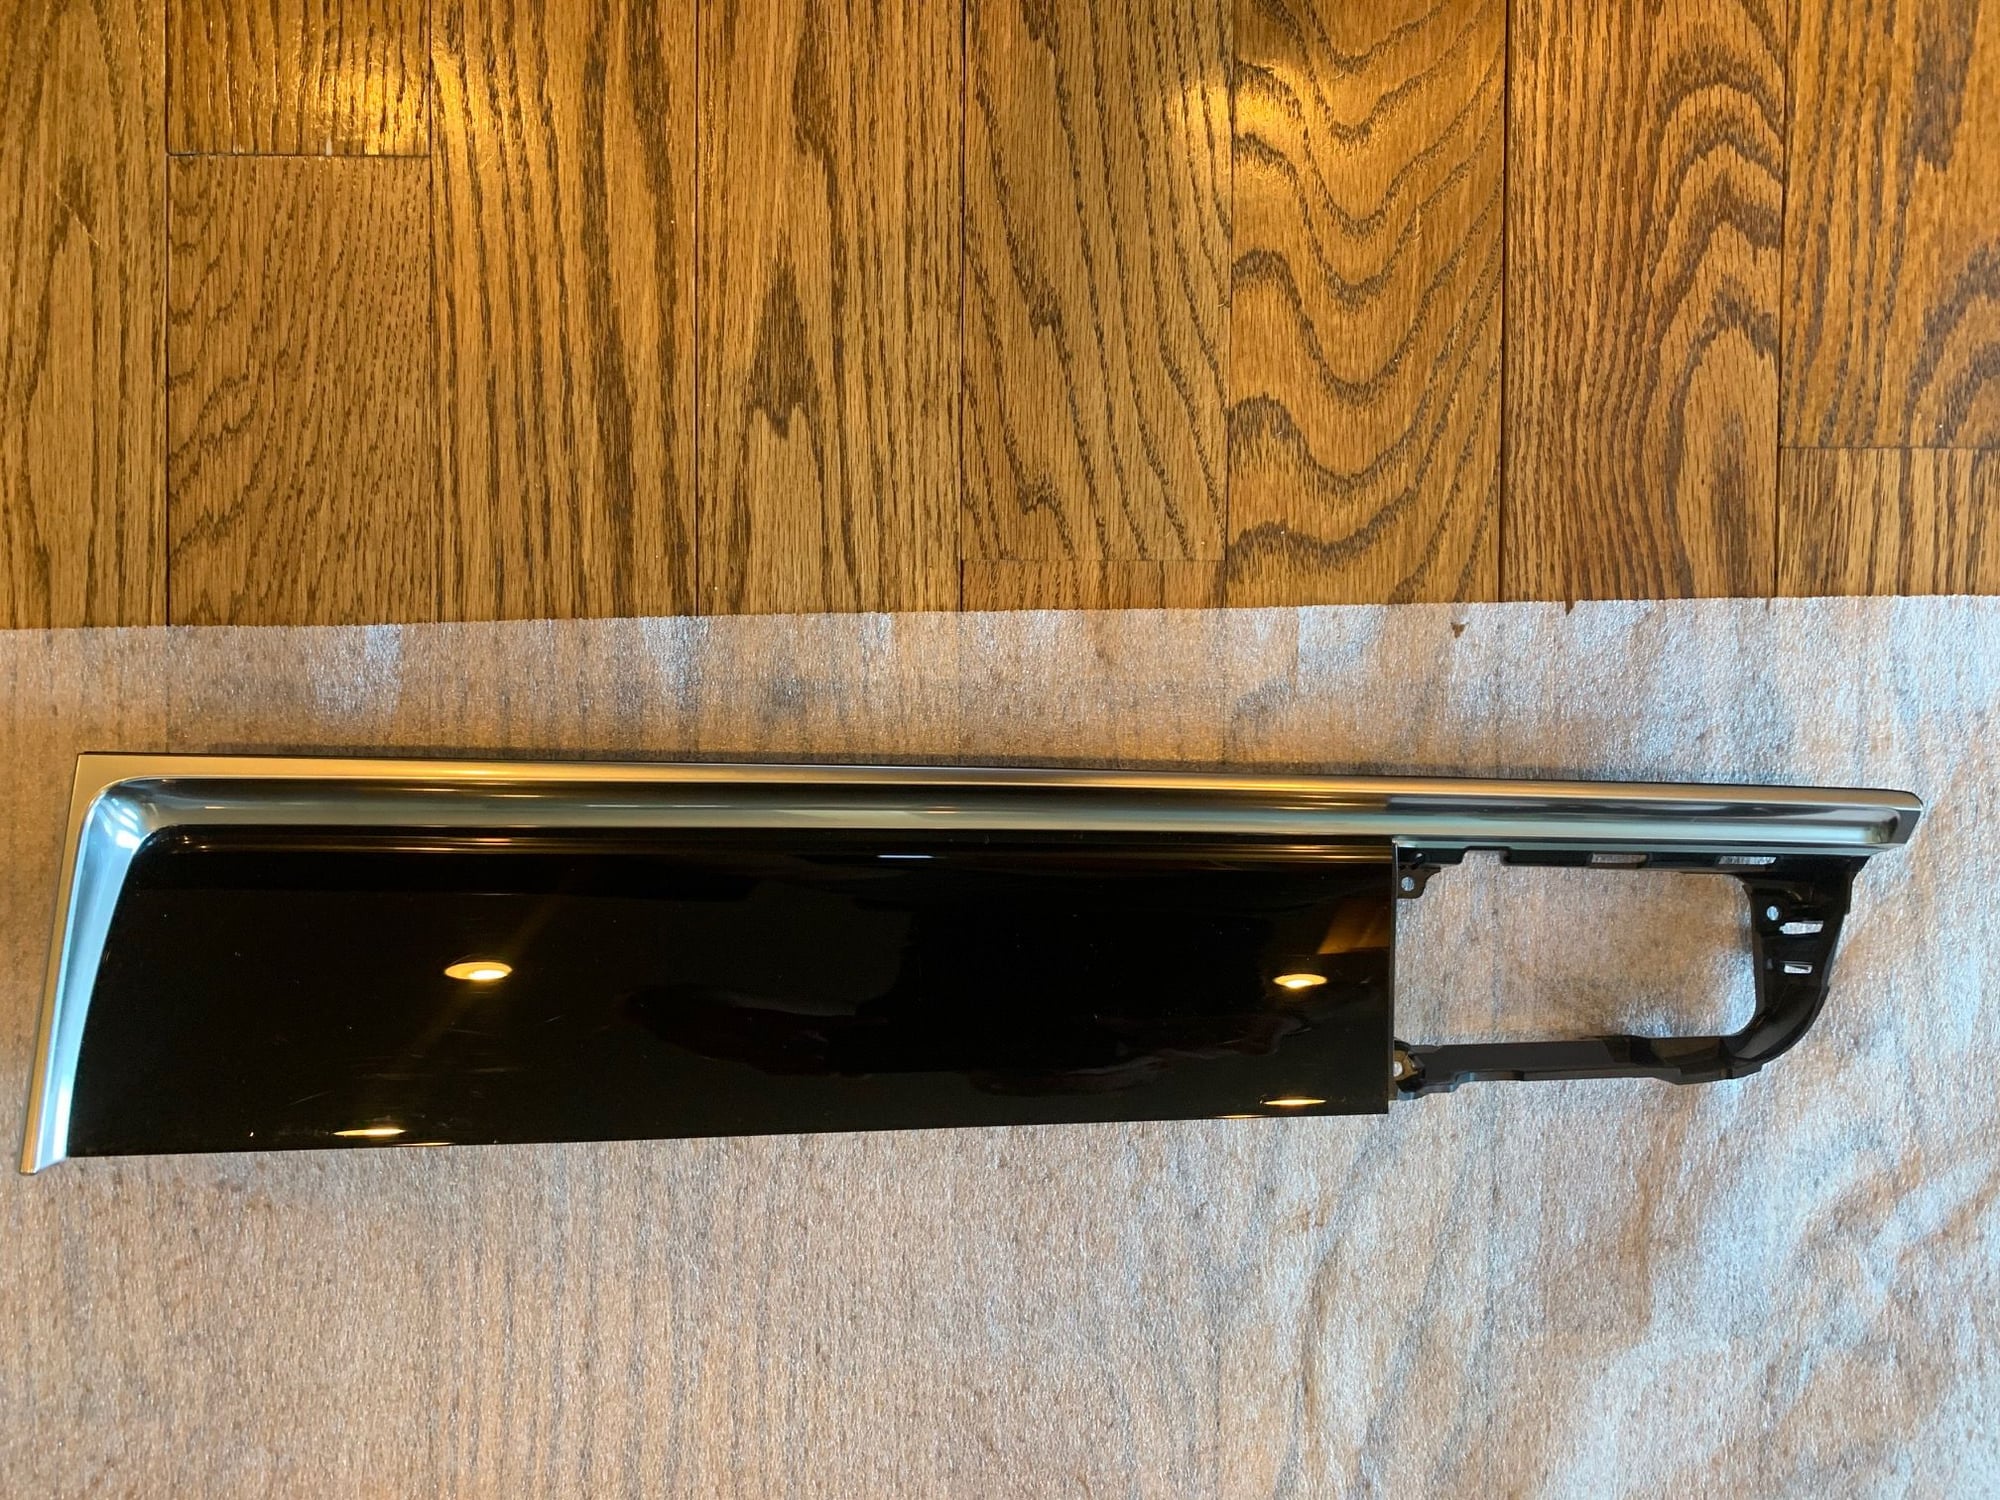 Interior/Upholstery - Porsche OEM 95B Macan 2019/20/21 Piano Black Interior Door/Dash Trim Set Of 7. - Used - 2019 to 2021 Porsche Macan - Boston, MA 02132, United States